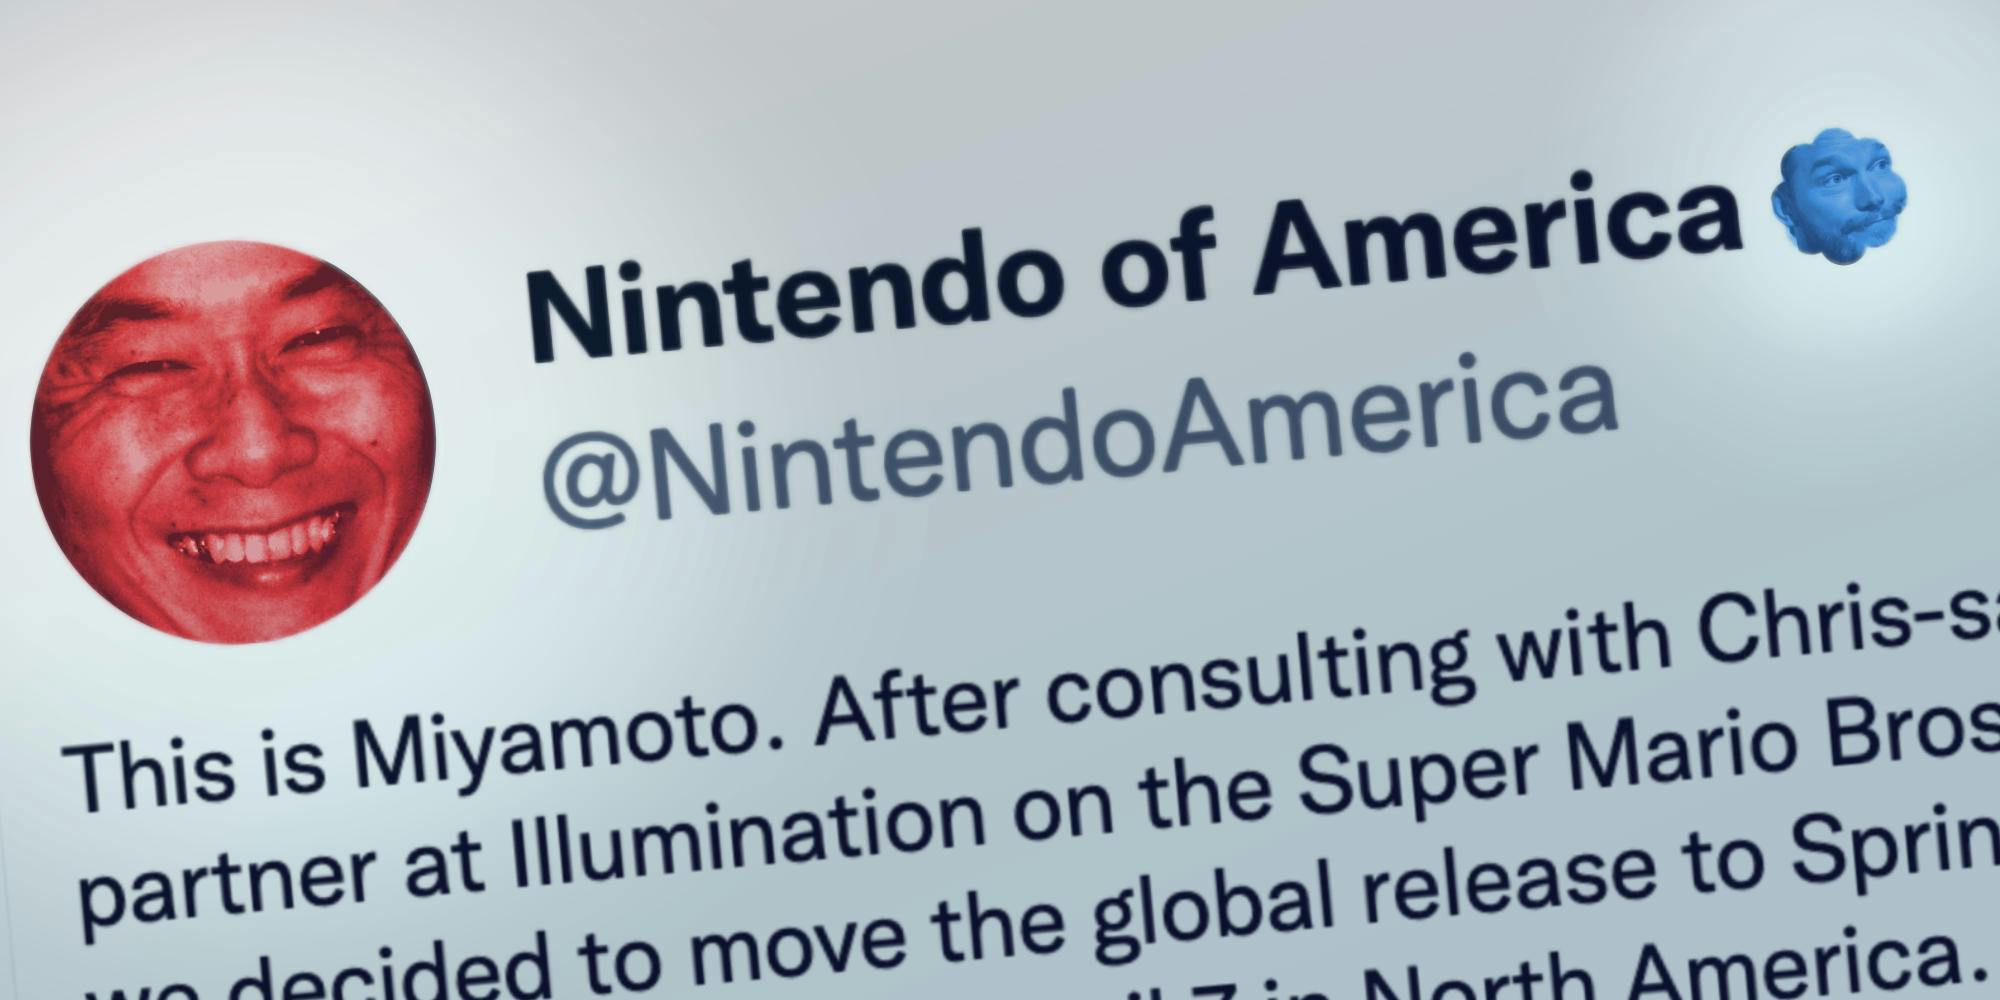 tweet from Nintendo with shigeru miyamoto and chris pratt as twitter icons